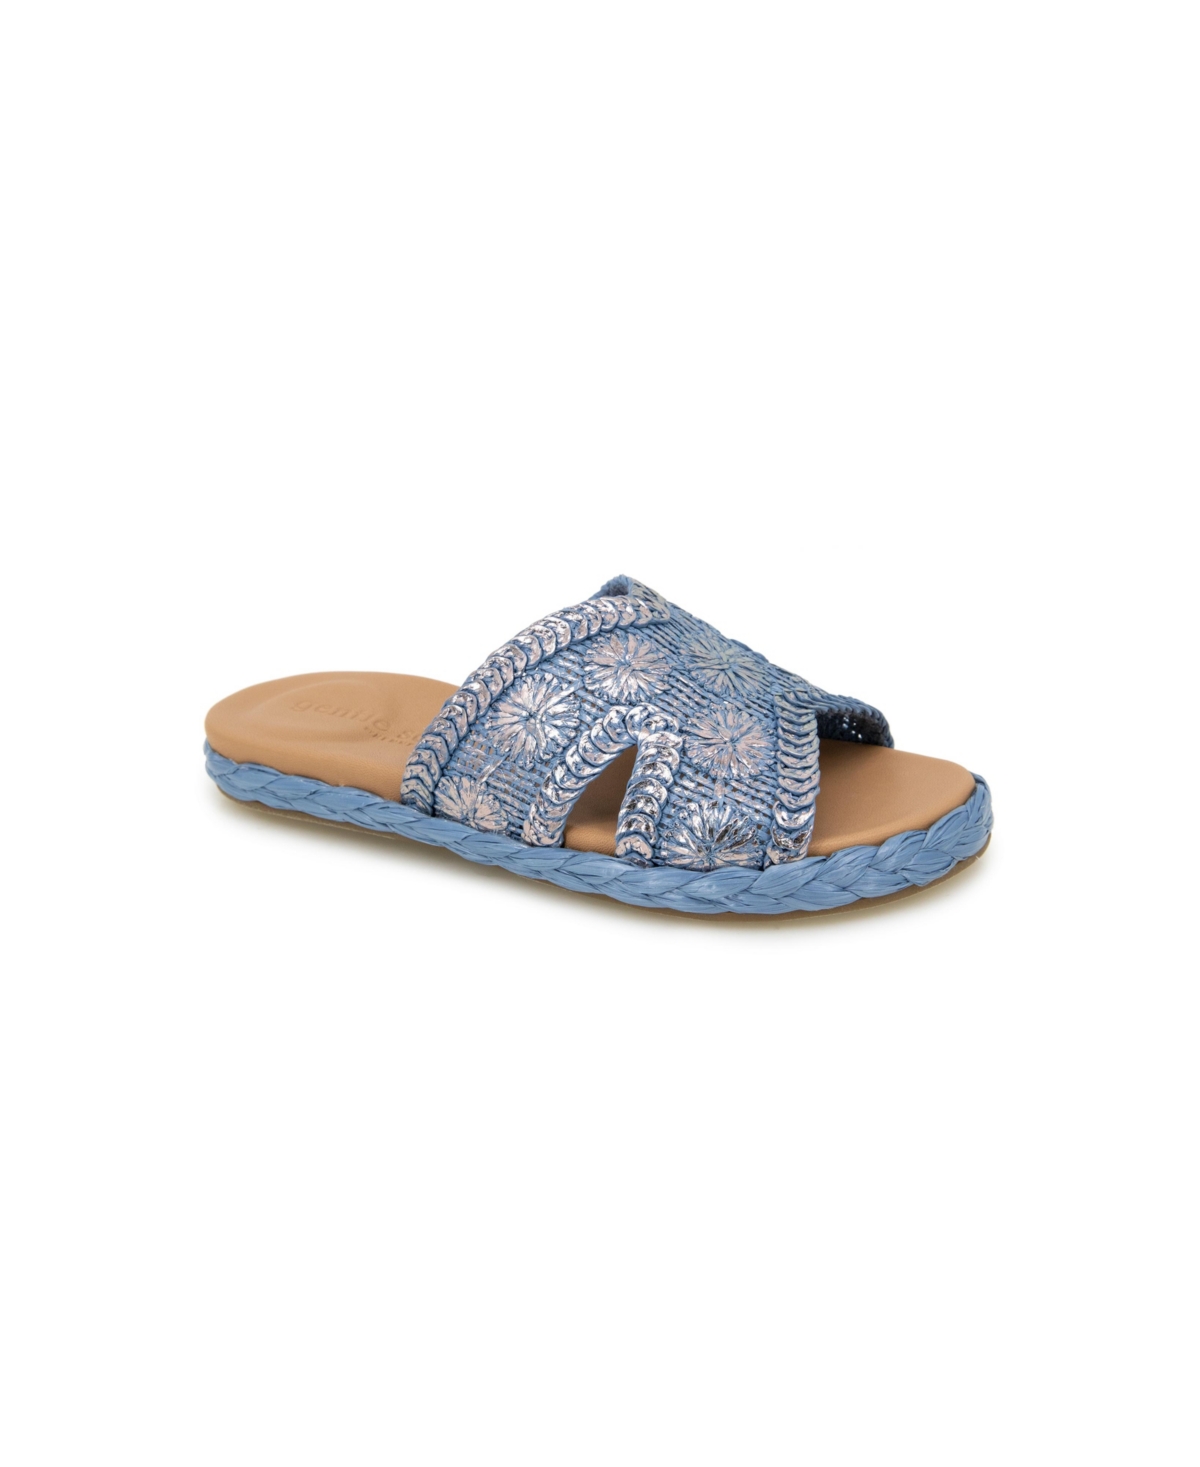 Women's Tristan Woven Slip-On Sandals - Zen Blue Woven